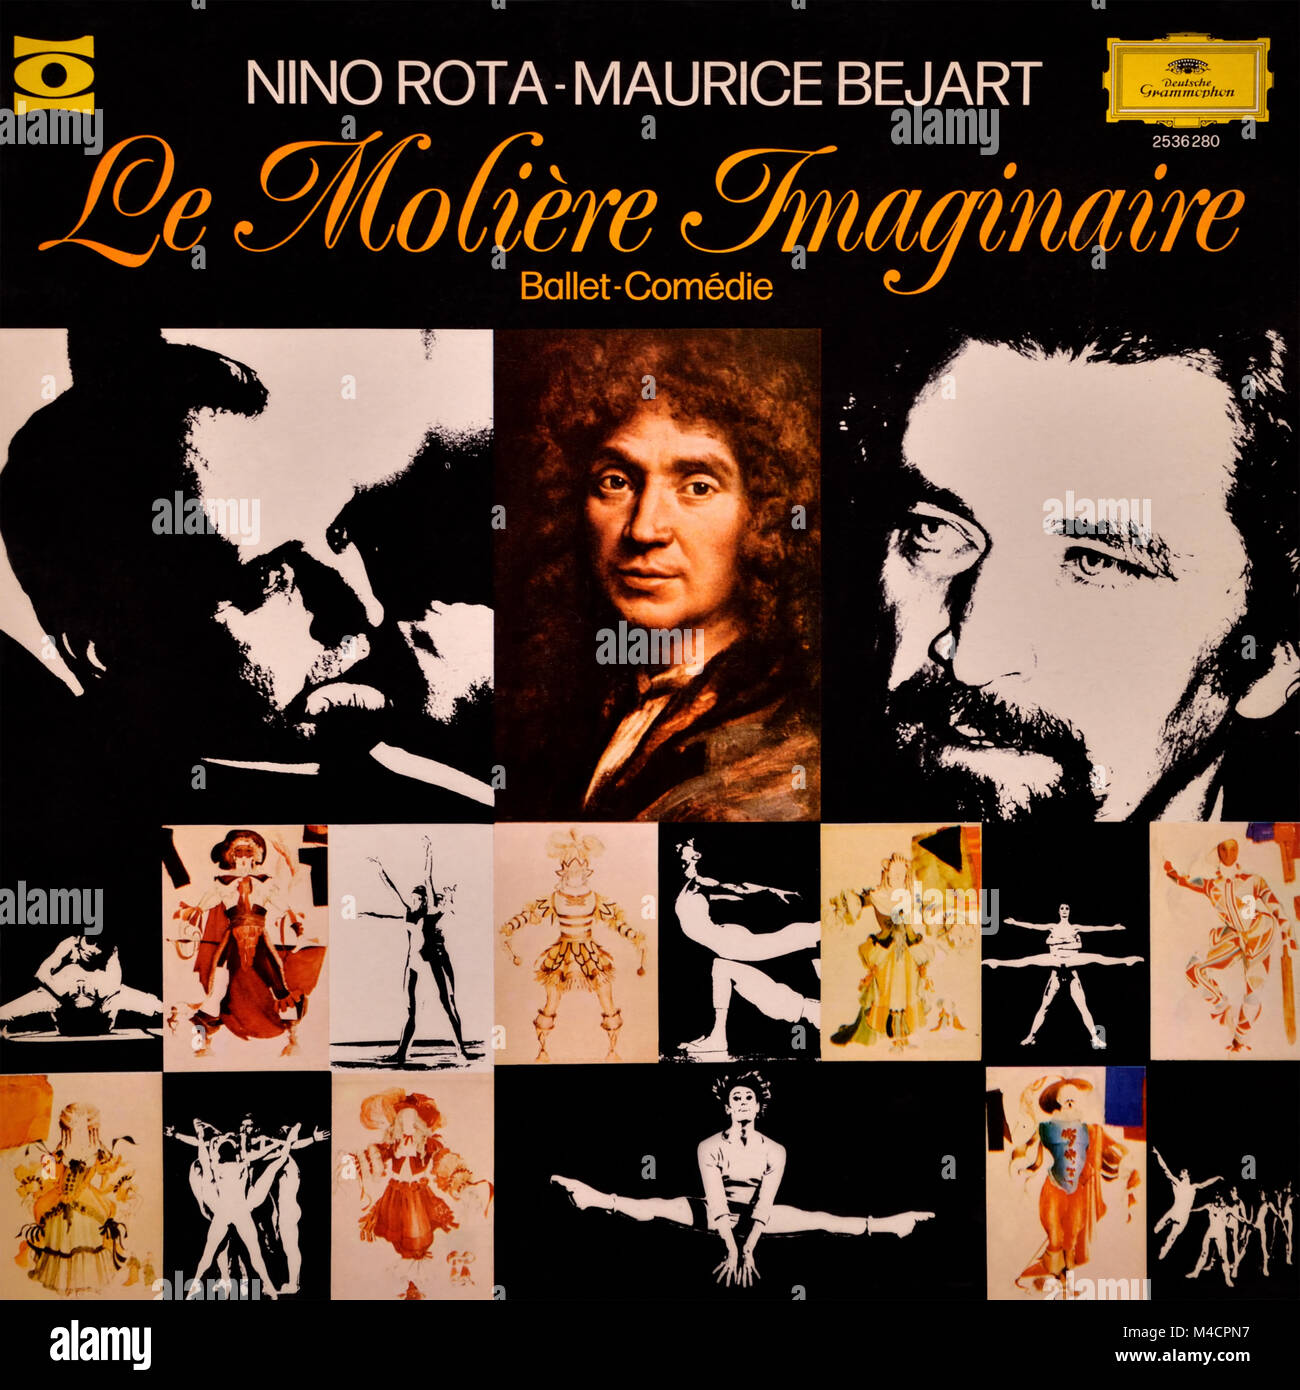 Nino Rota, Maurice Béjart - original vinyl album cover - Le Molière Imaginaire - 1976 Stock Photo